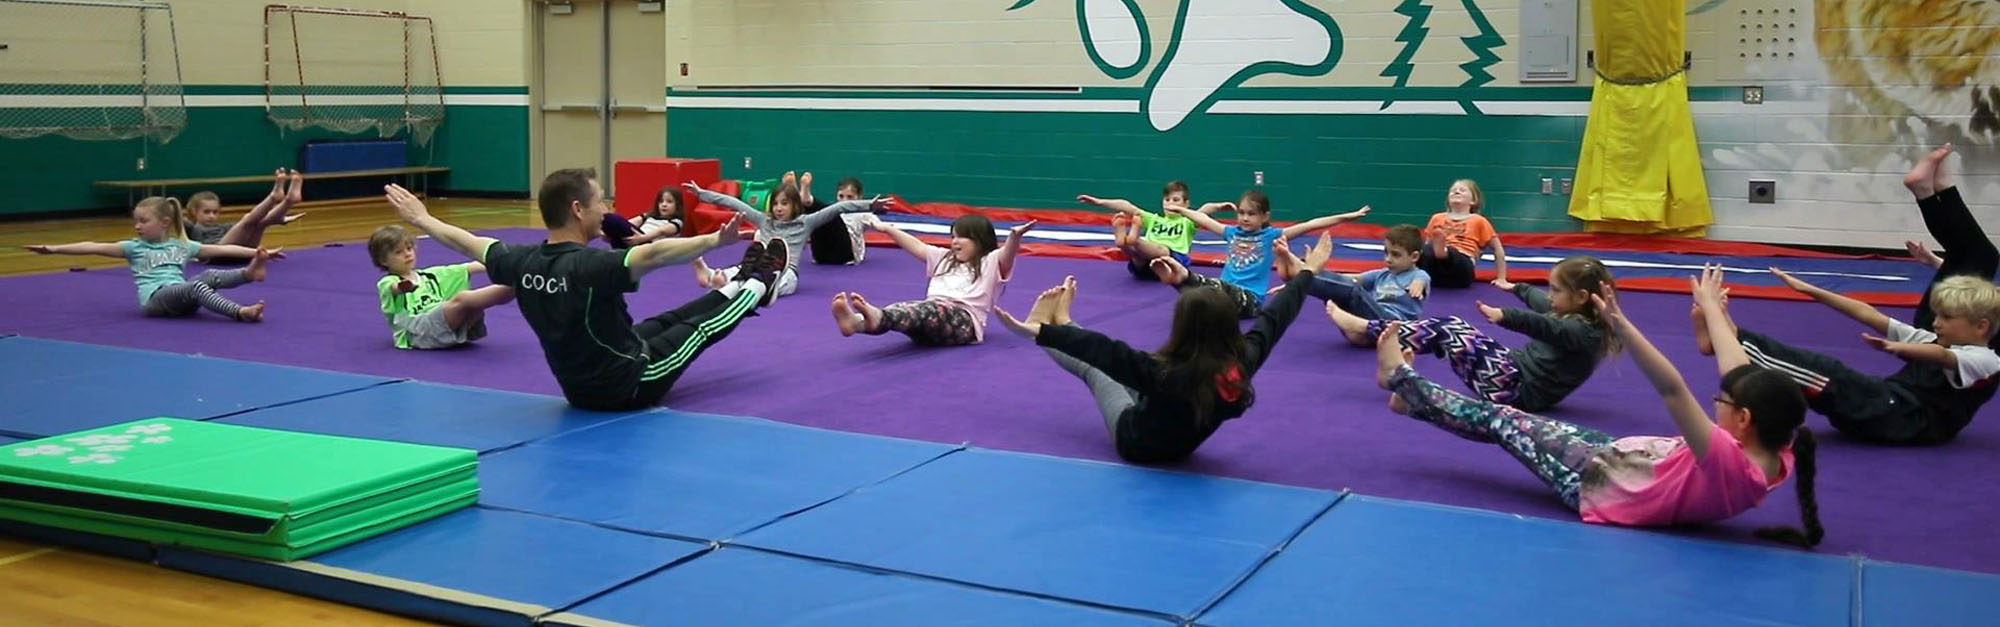 kelowna gymnastics school program